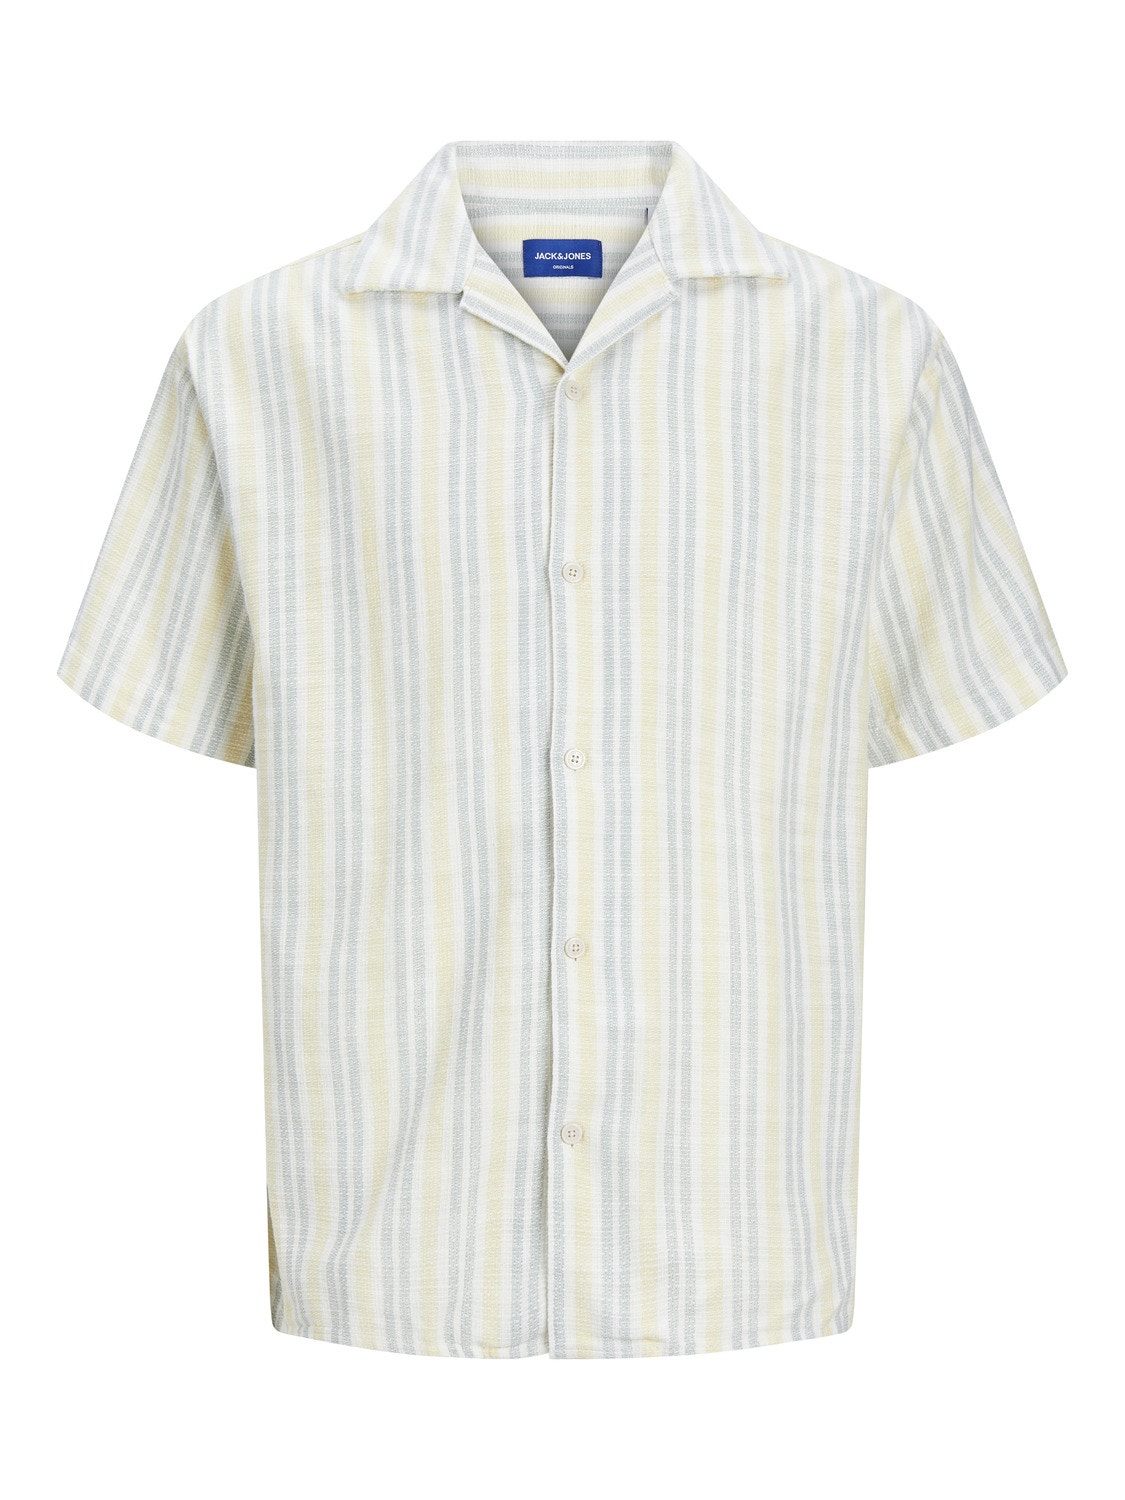 Jack & Jones Relaxed Fit Shirt -Italian Straw - 12233543